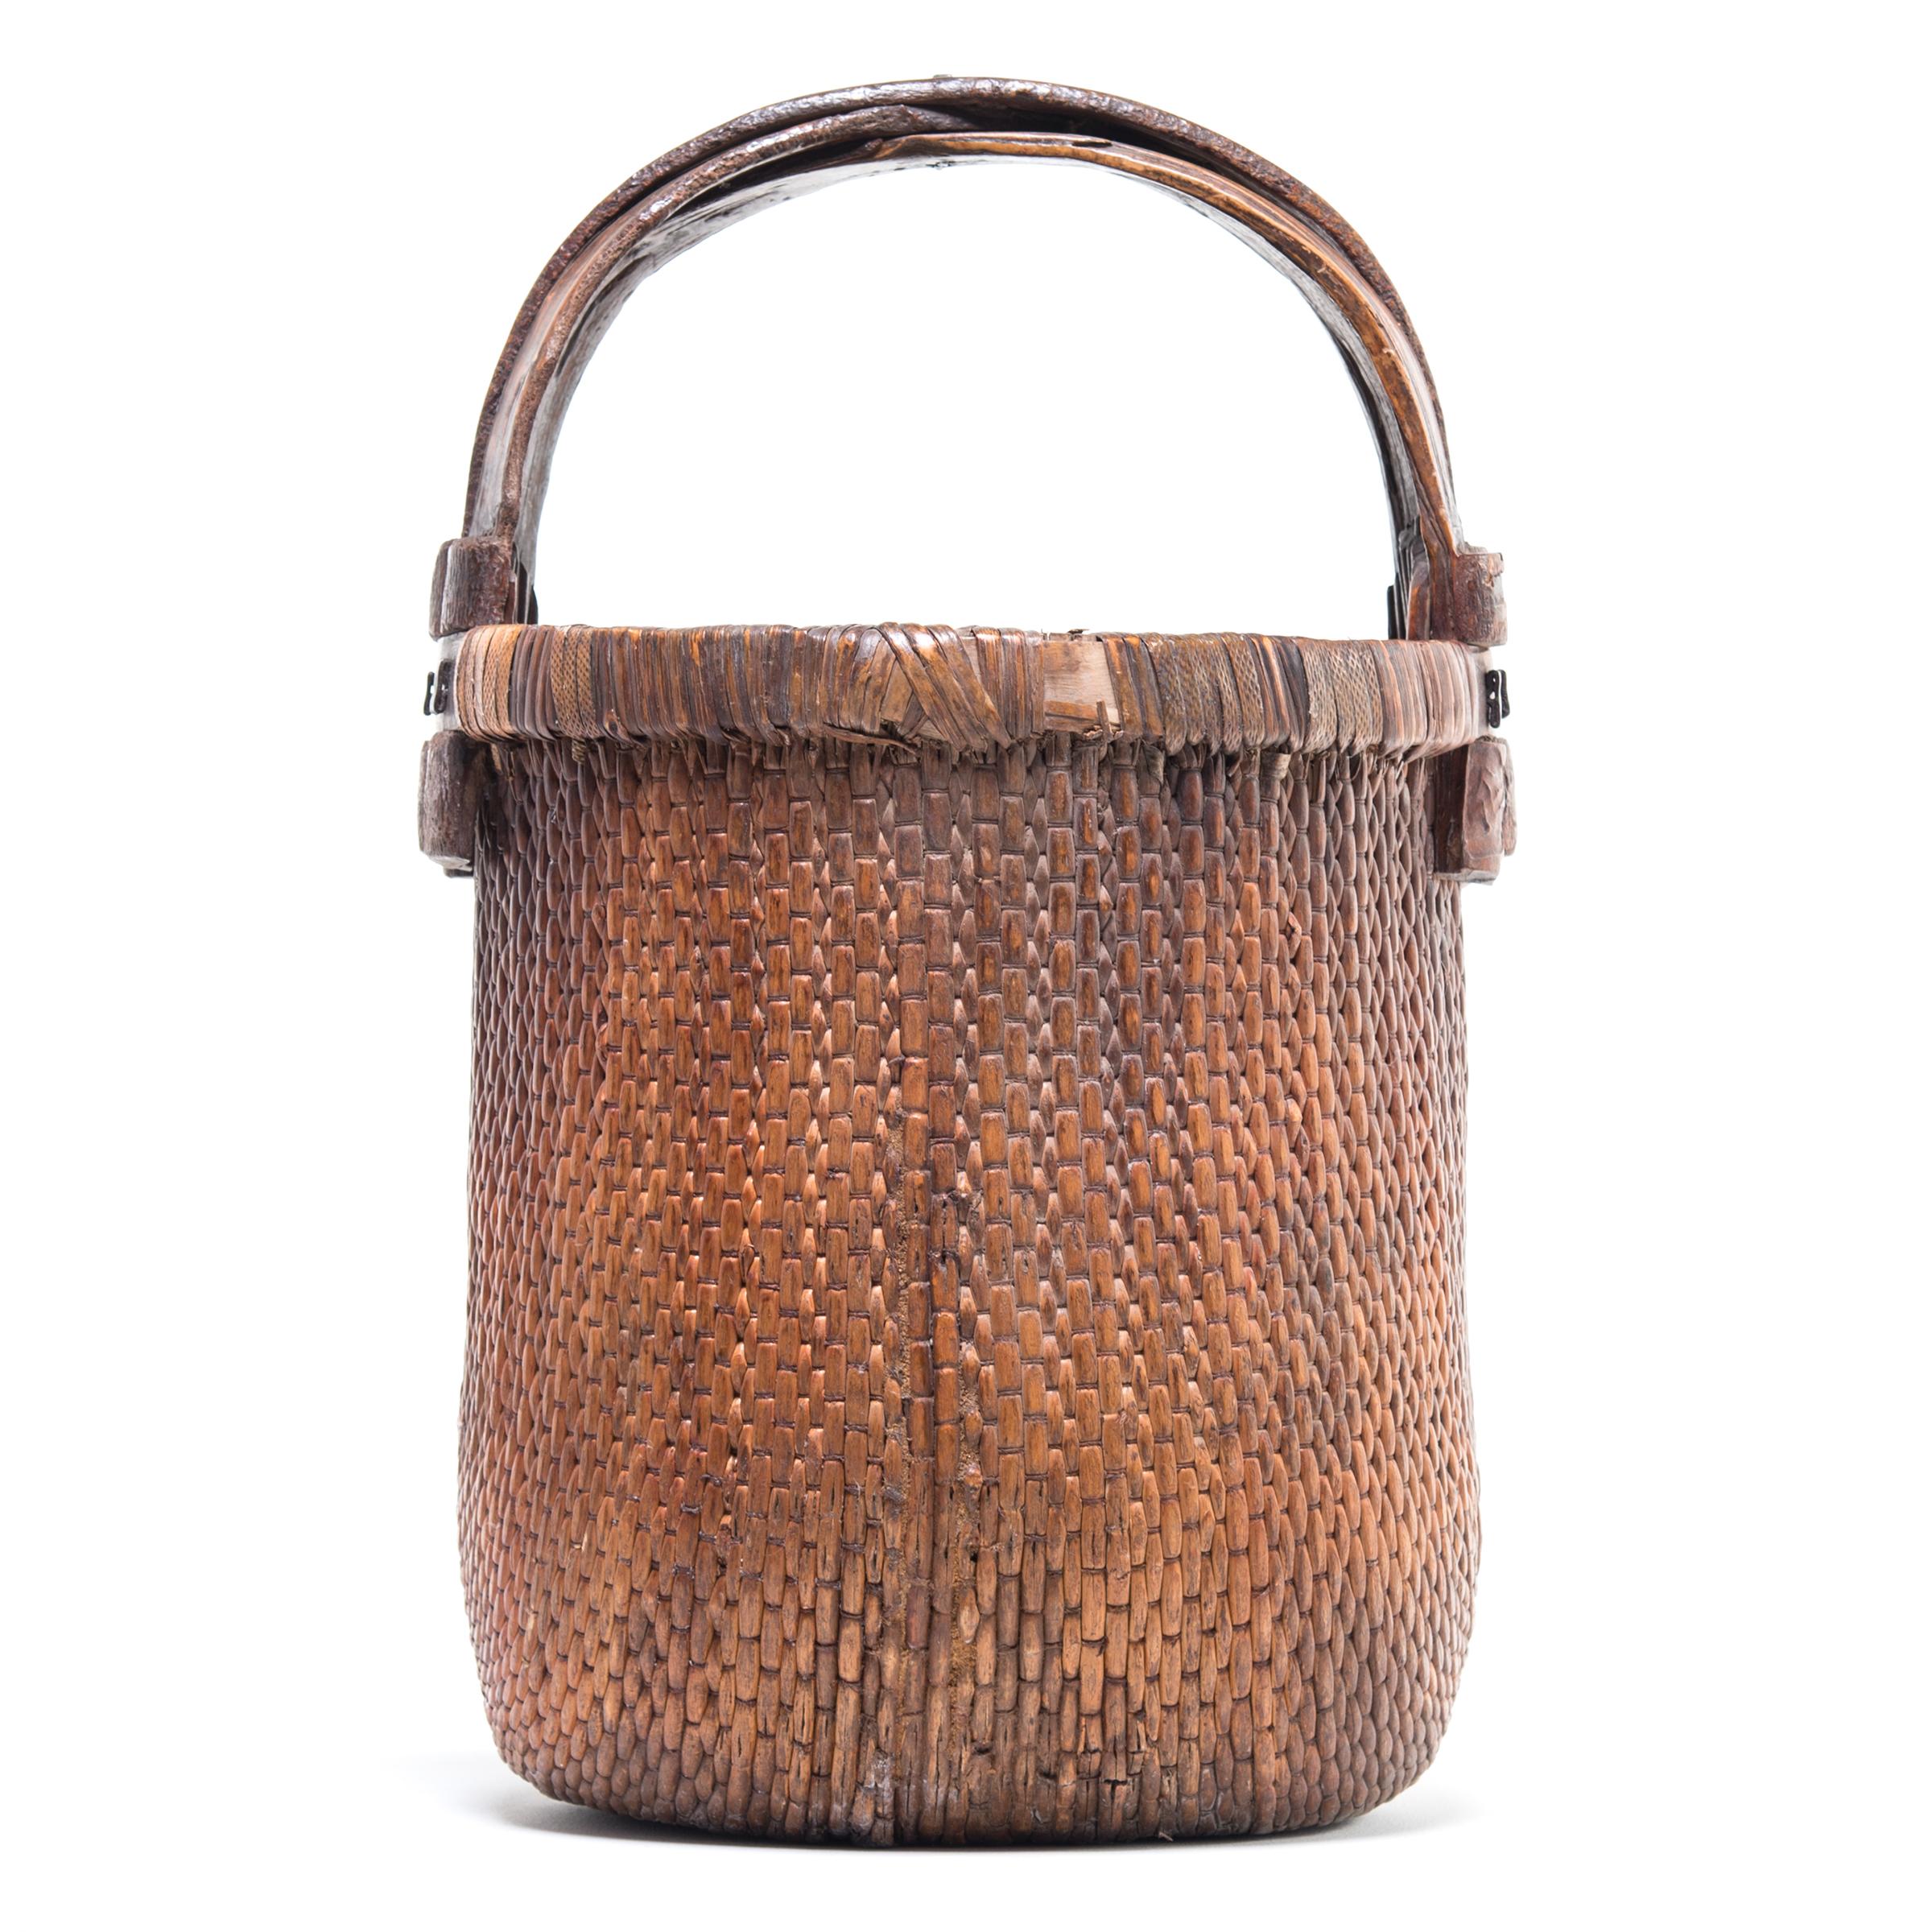 Rustic Chinese Bent Handle Willow Basket, circa 1900